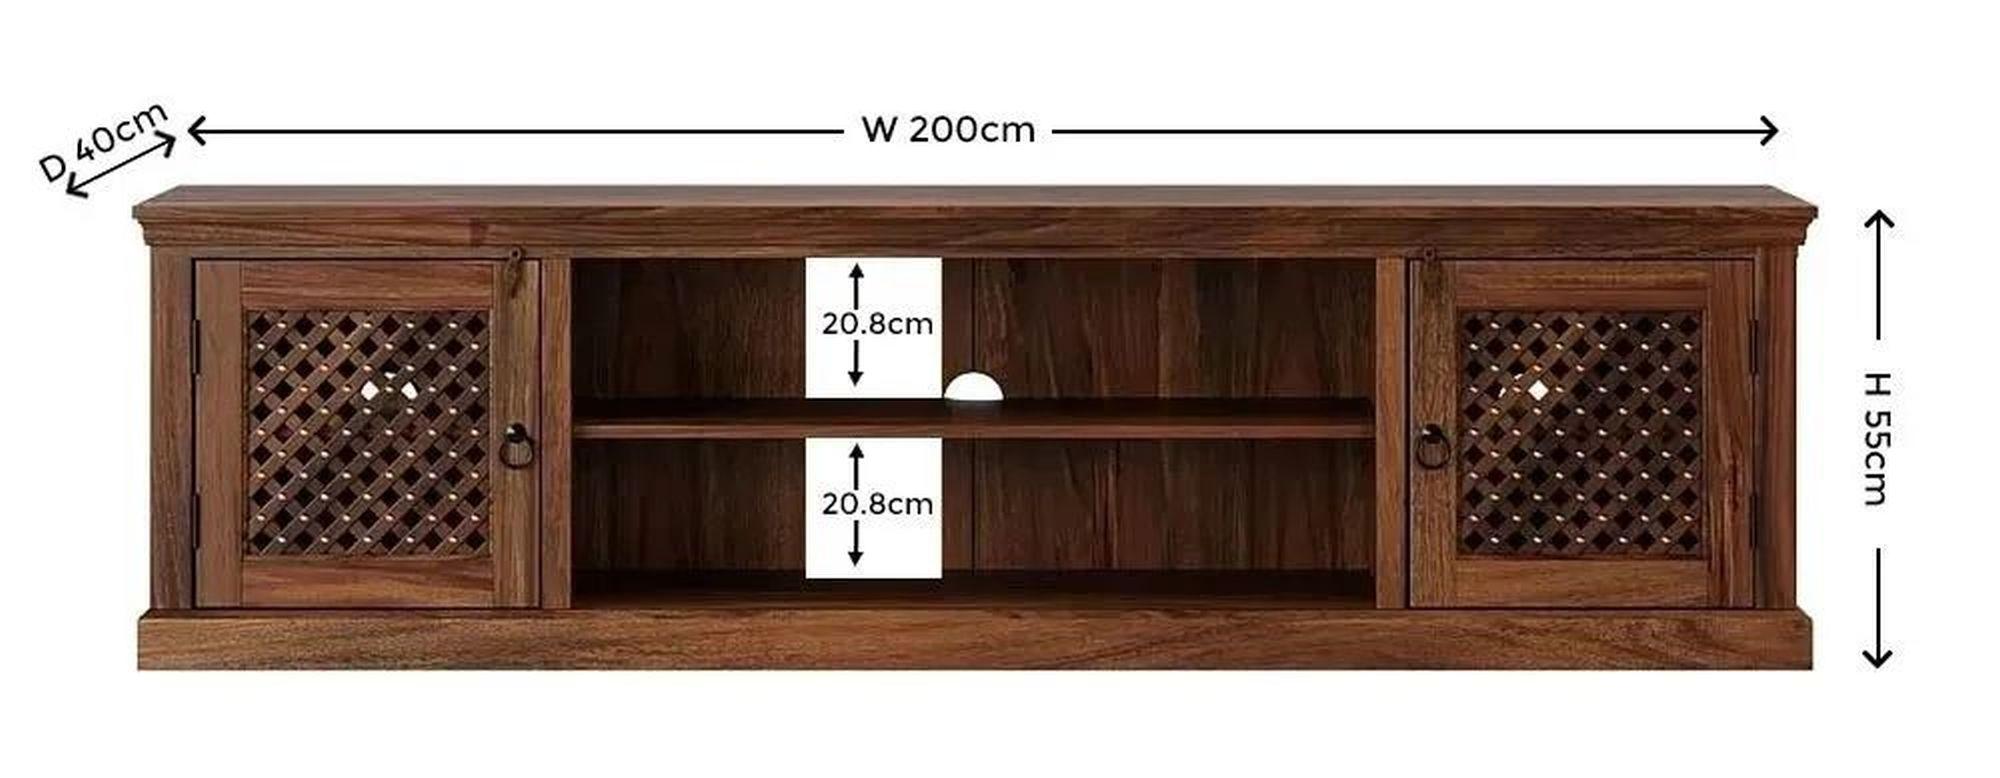 Maharani Sheesham TV Unit, Indian Wood, Wide Cabinet 200cm, Stand Upto 75in Plasma TV, Lattice Jali Design - 2 Door with 1 Shelf